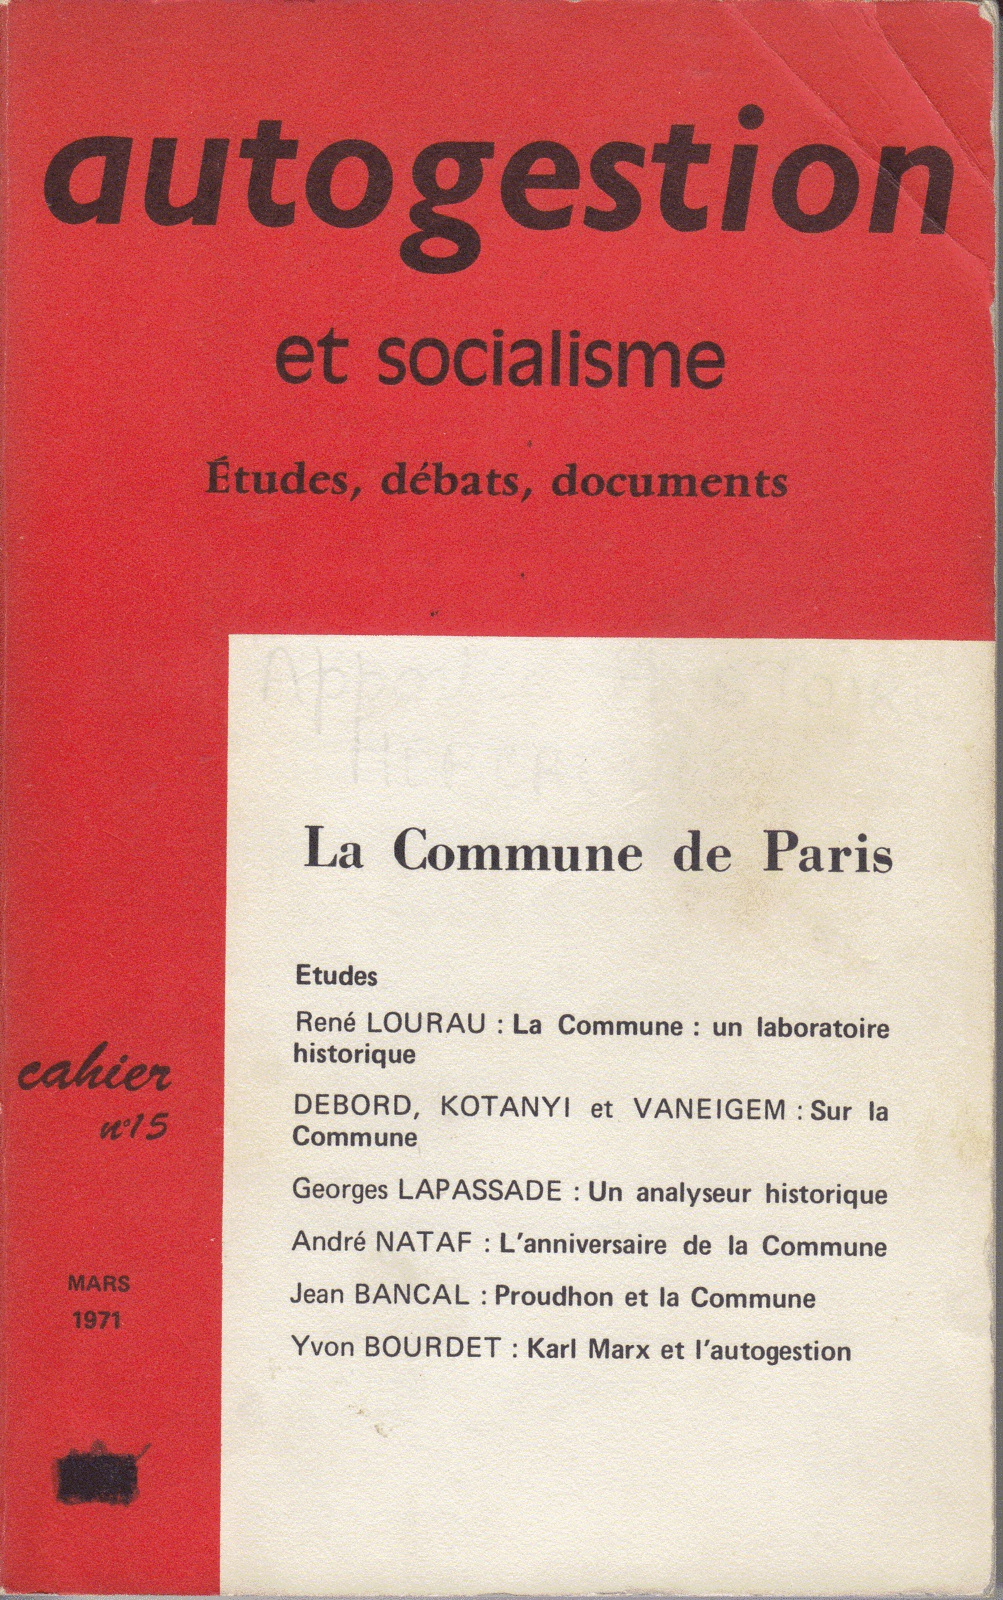 Marxismo libertario. Yvon Bourdet – Karl Marx e l’autogestione; da: “Autogestion et socialisme”, n°15, marzo 1971